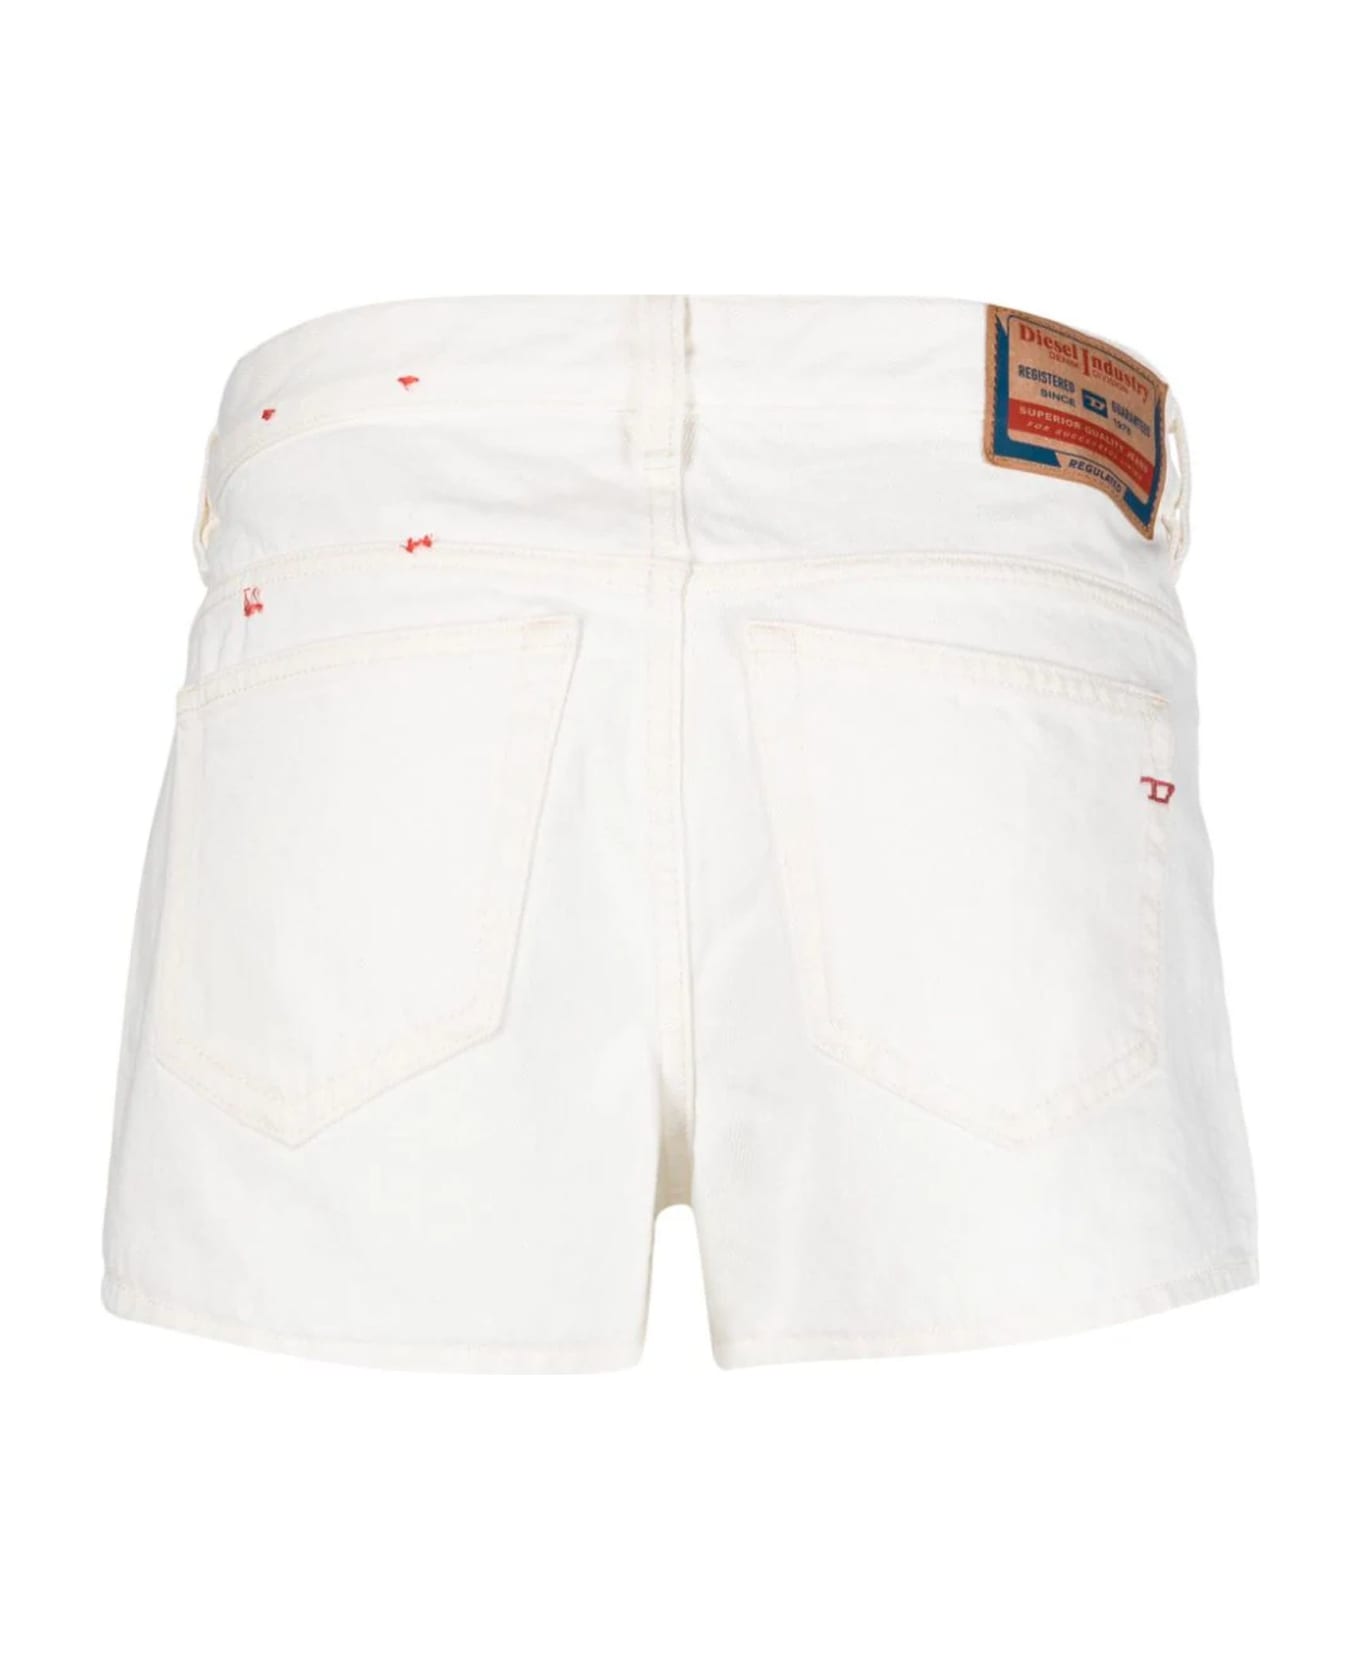 Diesel White Cotton De-yuba Denim Shorts - White